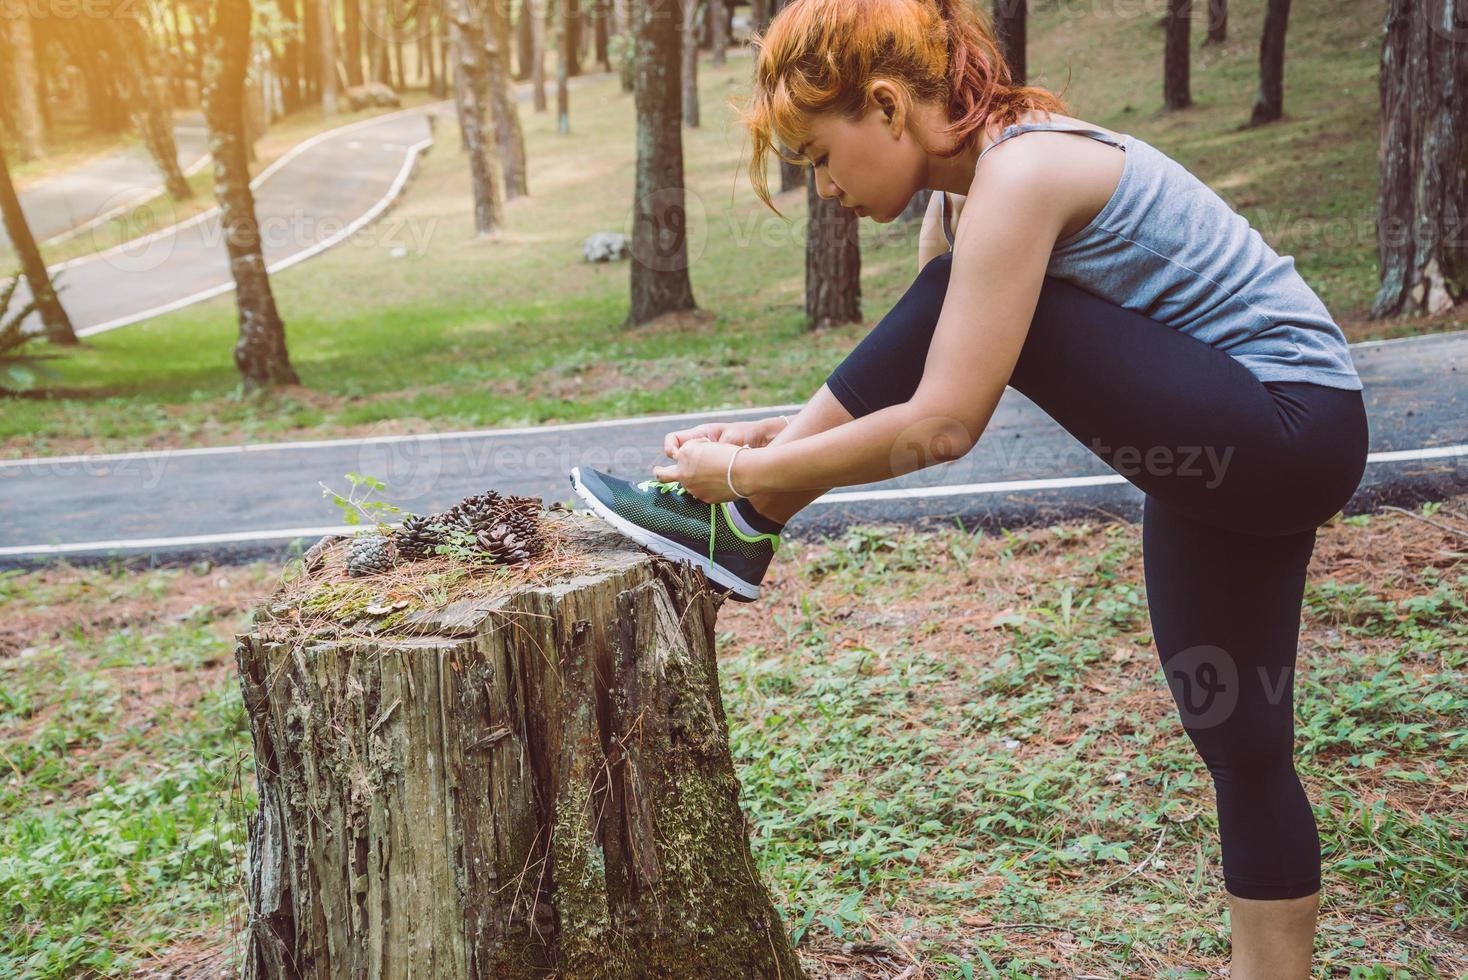 vrouwen oefenen op straat. natuurpark. meisje dat benen opheft om te oefenen. oefening, hardlopen. foto